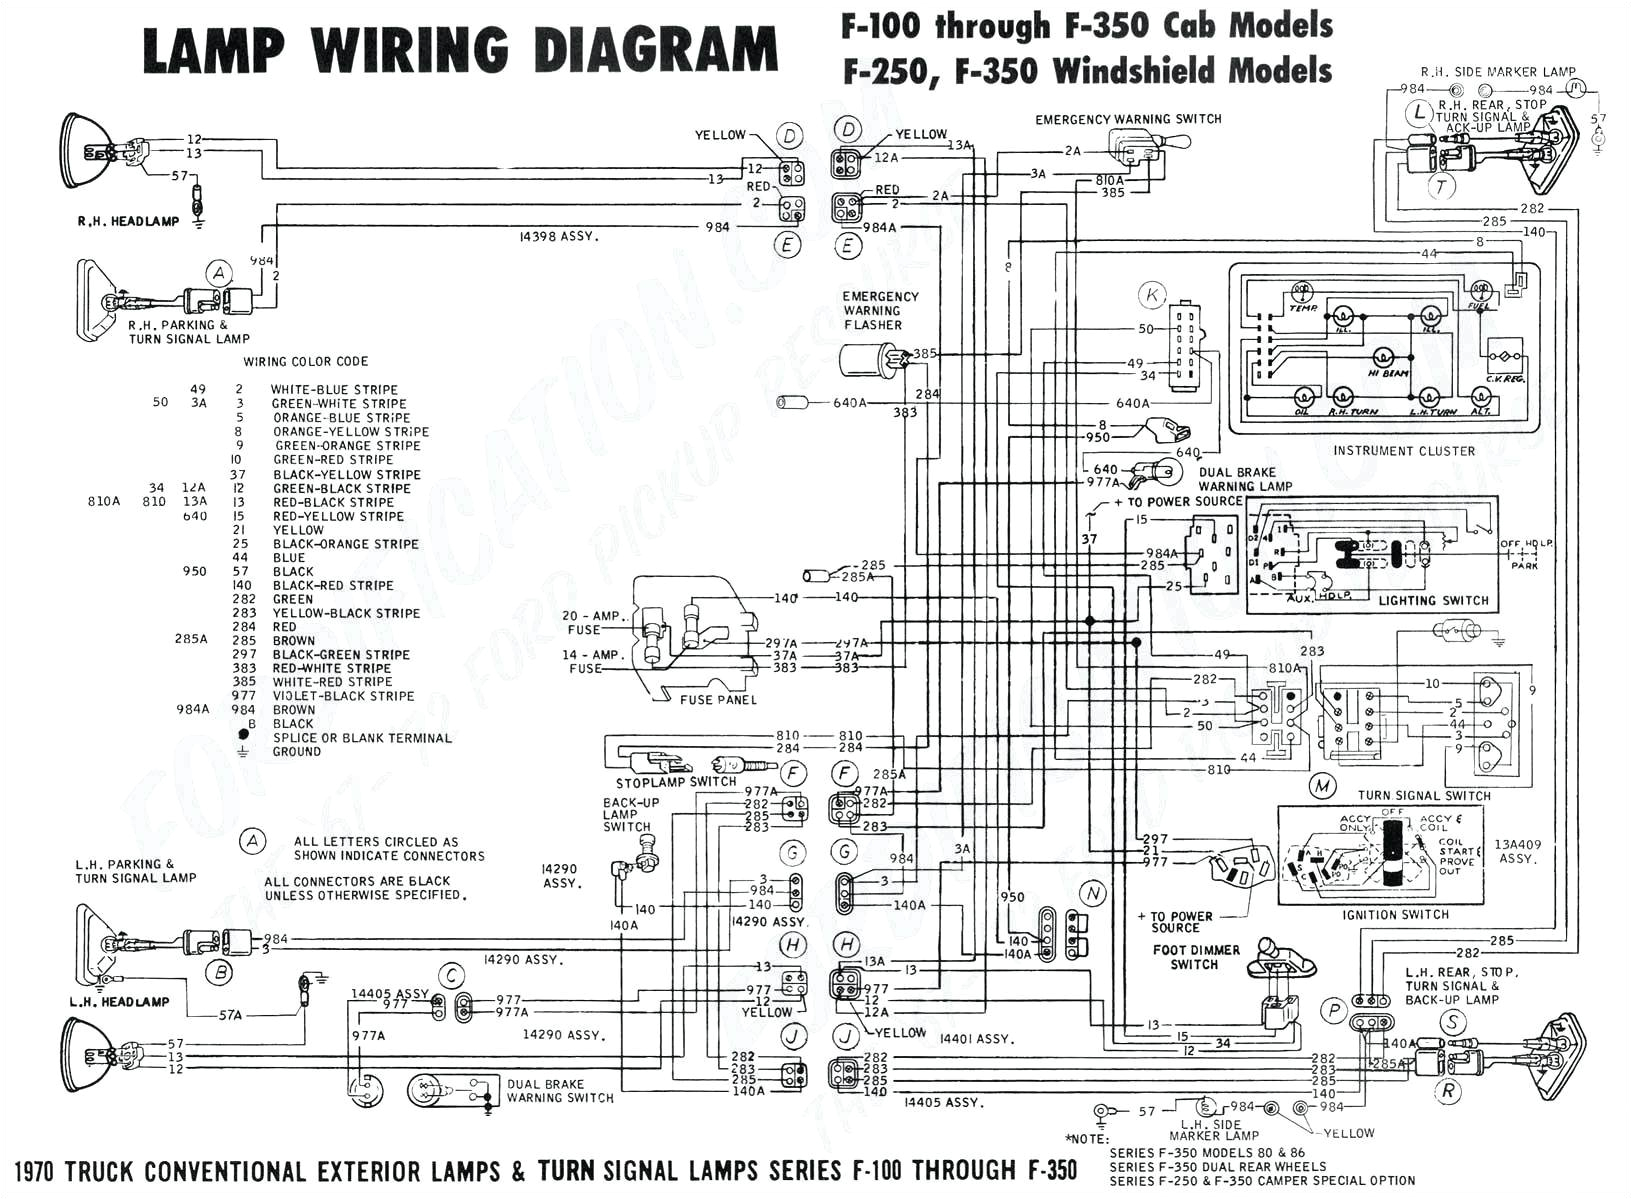 02 wrx fuse box diagram wiring diagram centre subaru crosstrek fuse box diagram 02 wrx fuse